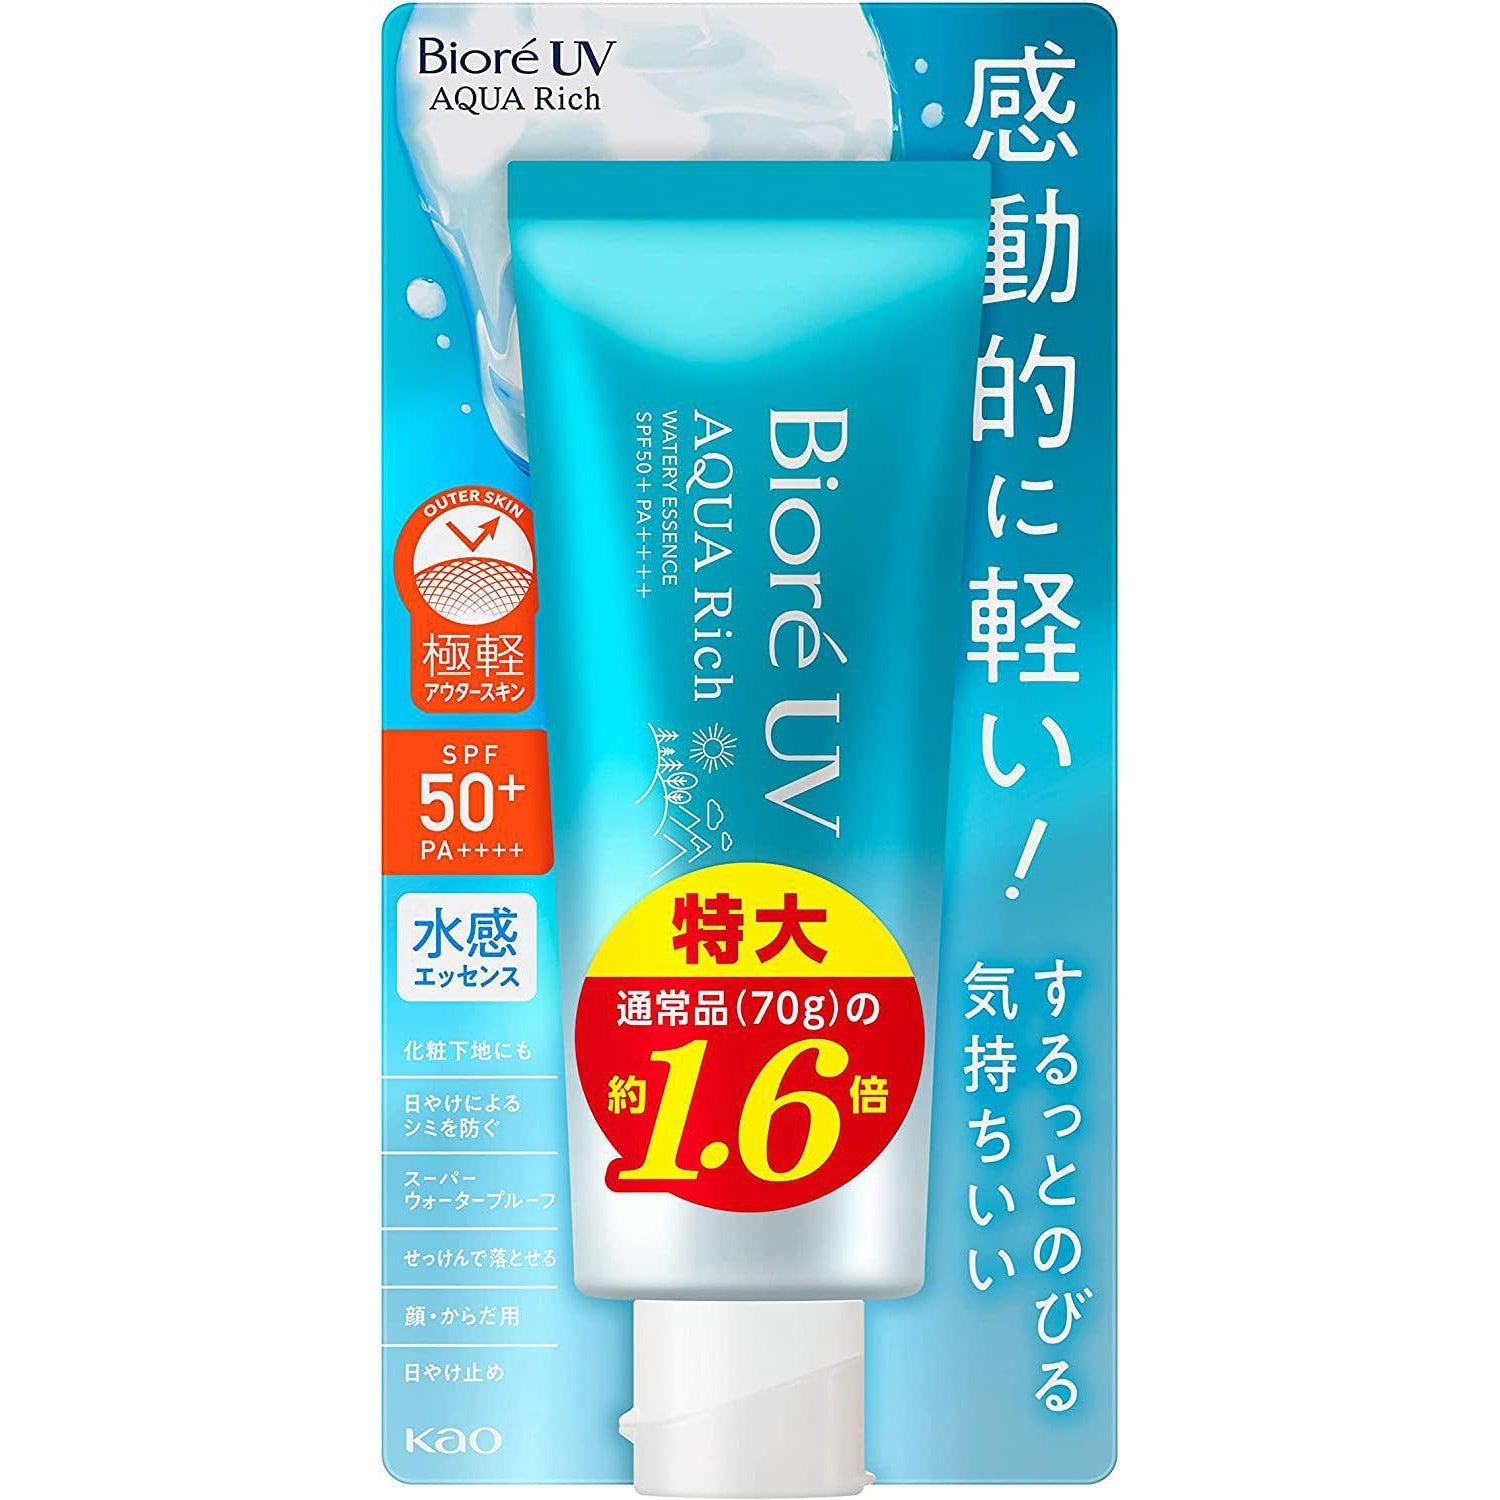 Kao Biore UV Aqua Rich Watery Essence SPF50+ PA++++ Big Size 110g, Japanese Taste